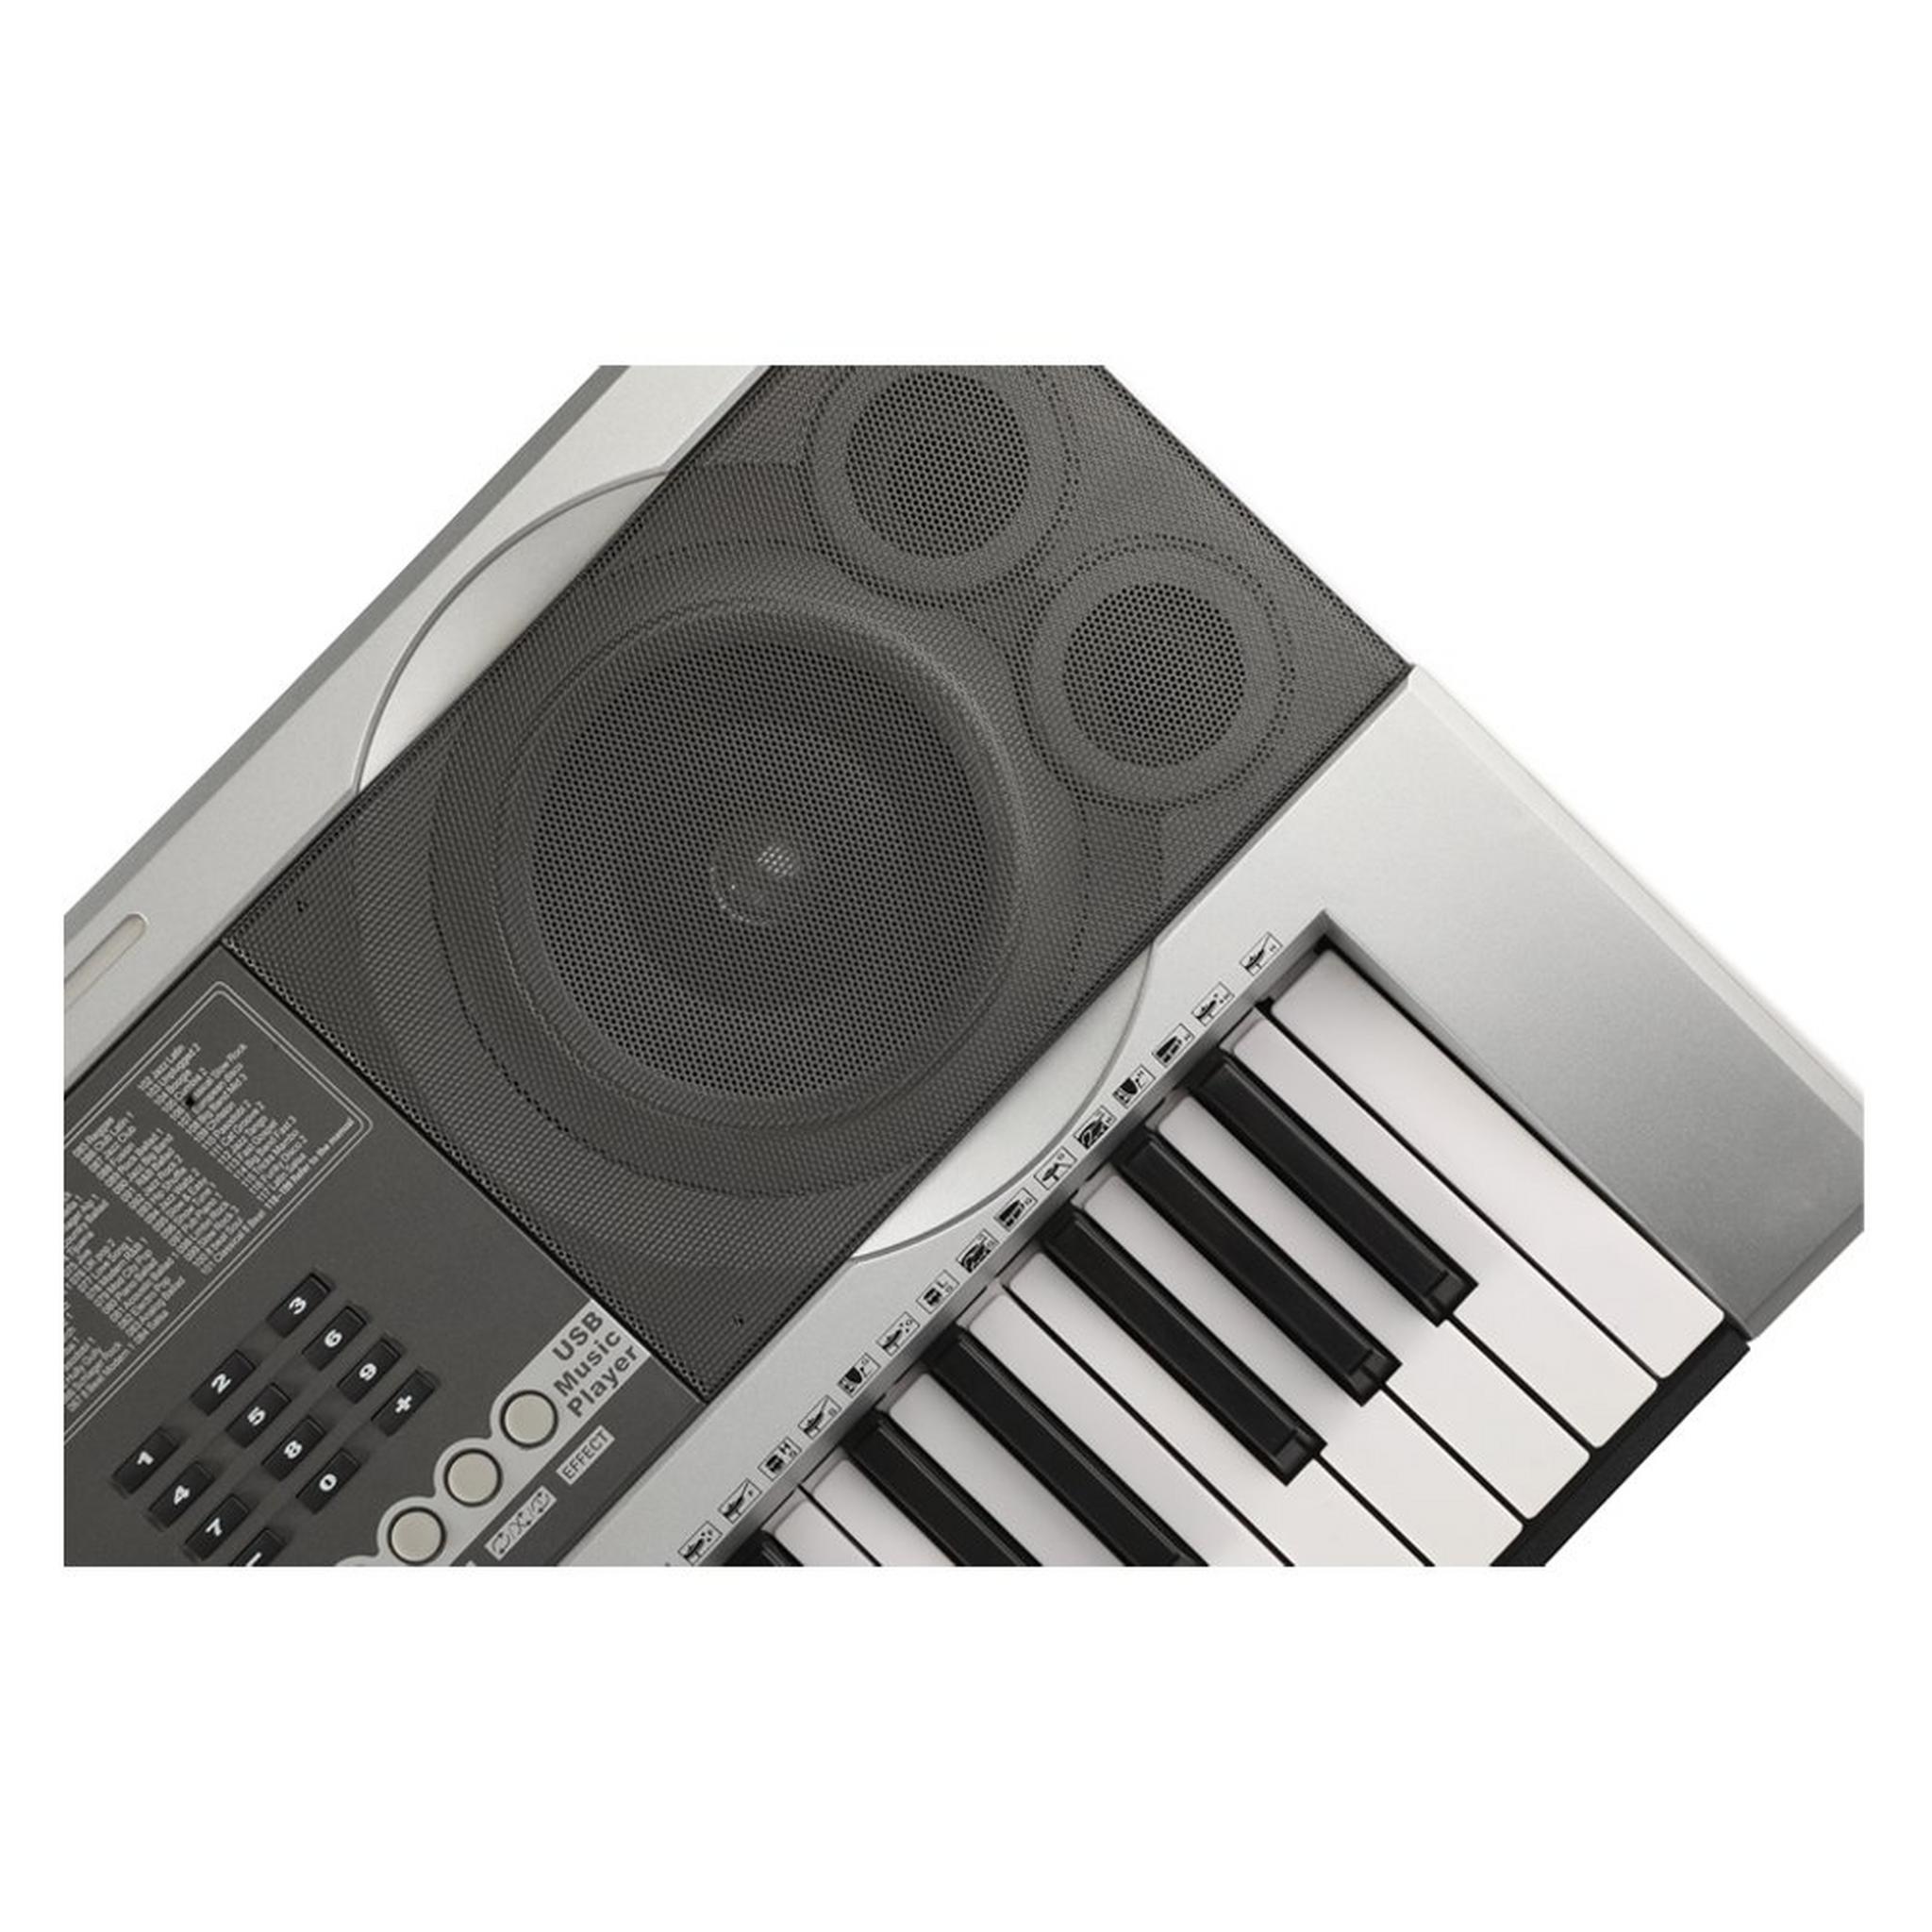 Wansa 61 Keys Musical Keyboard (MK-805) - Silver